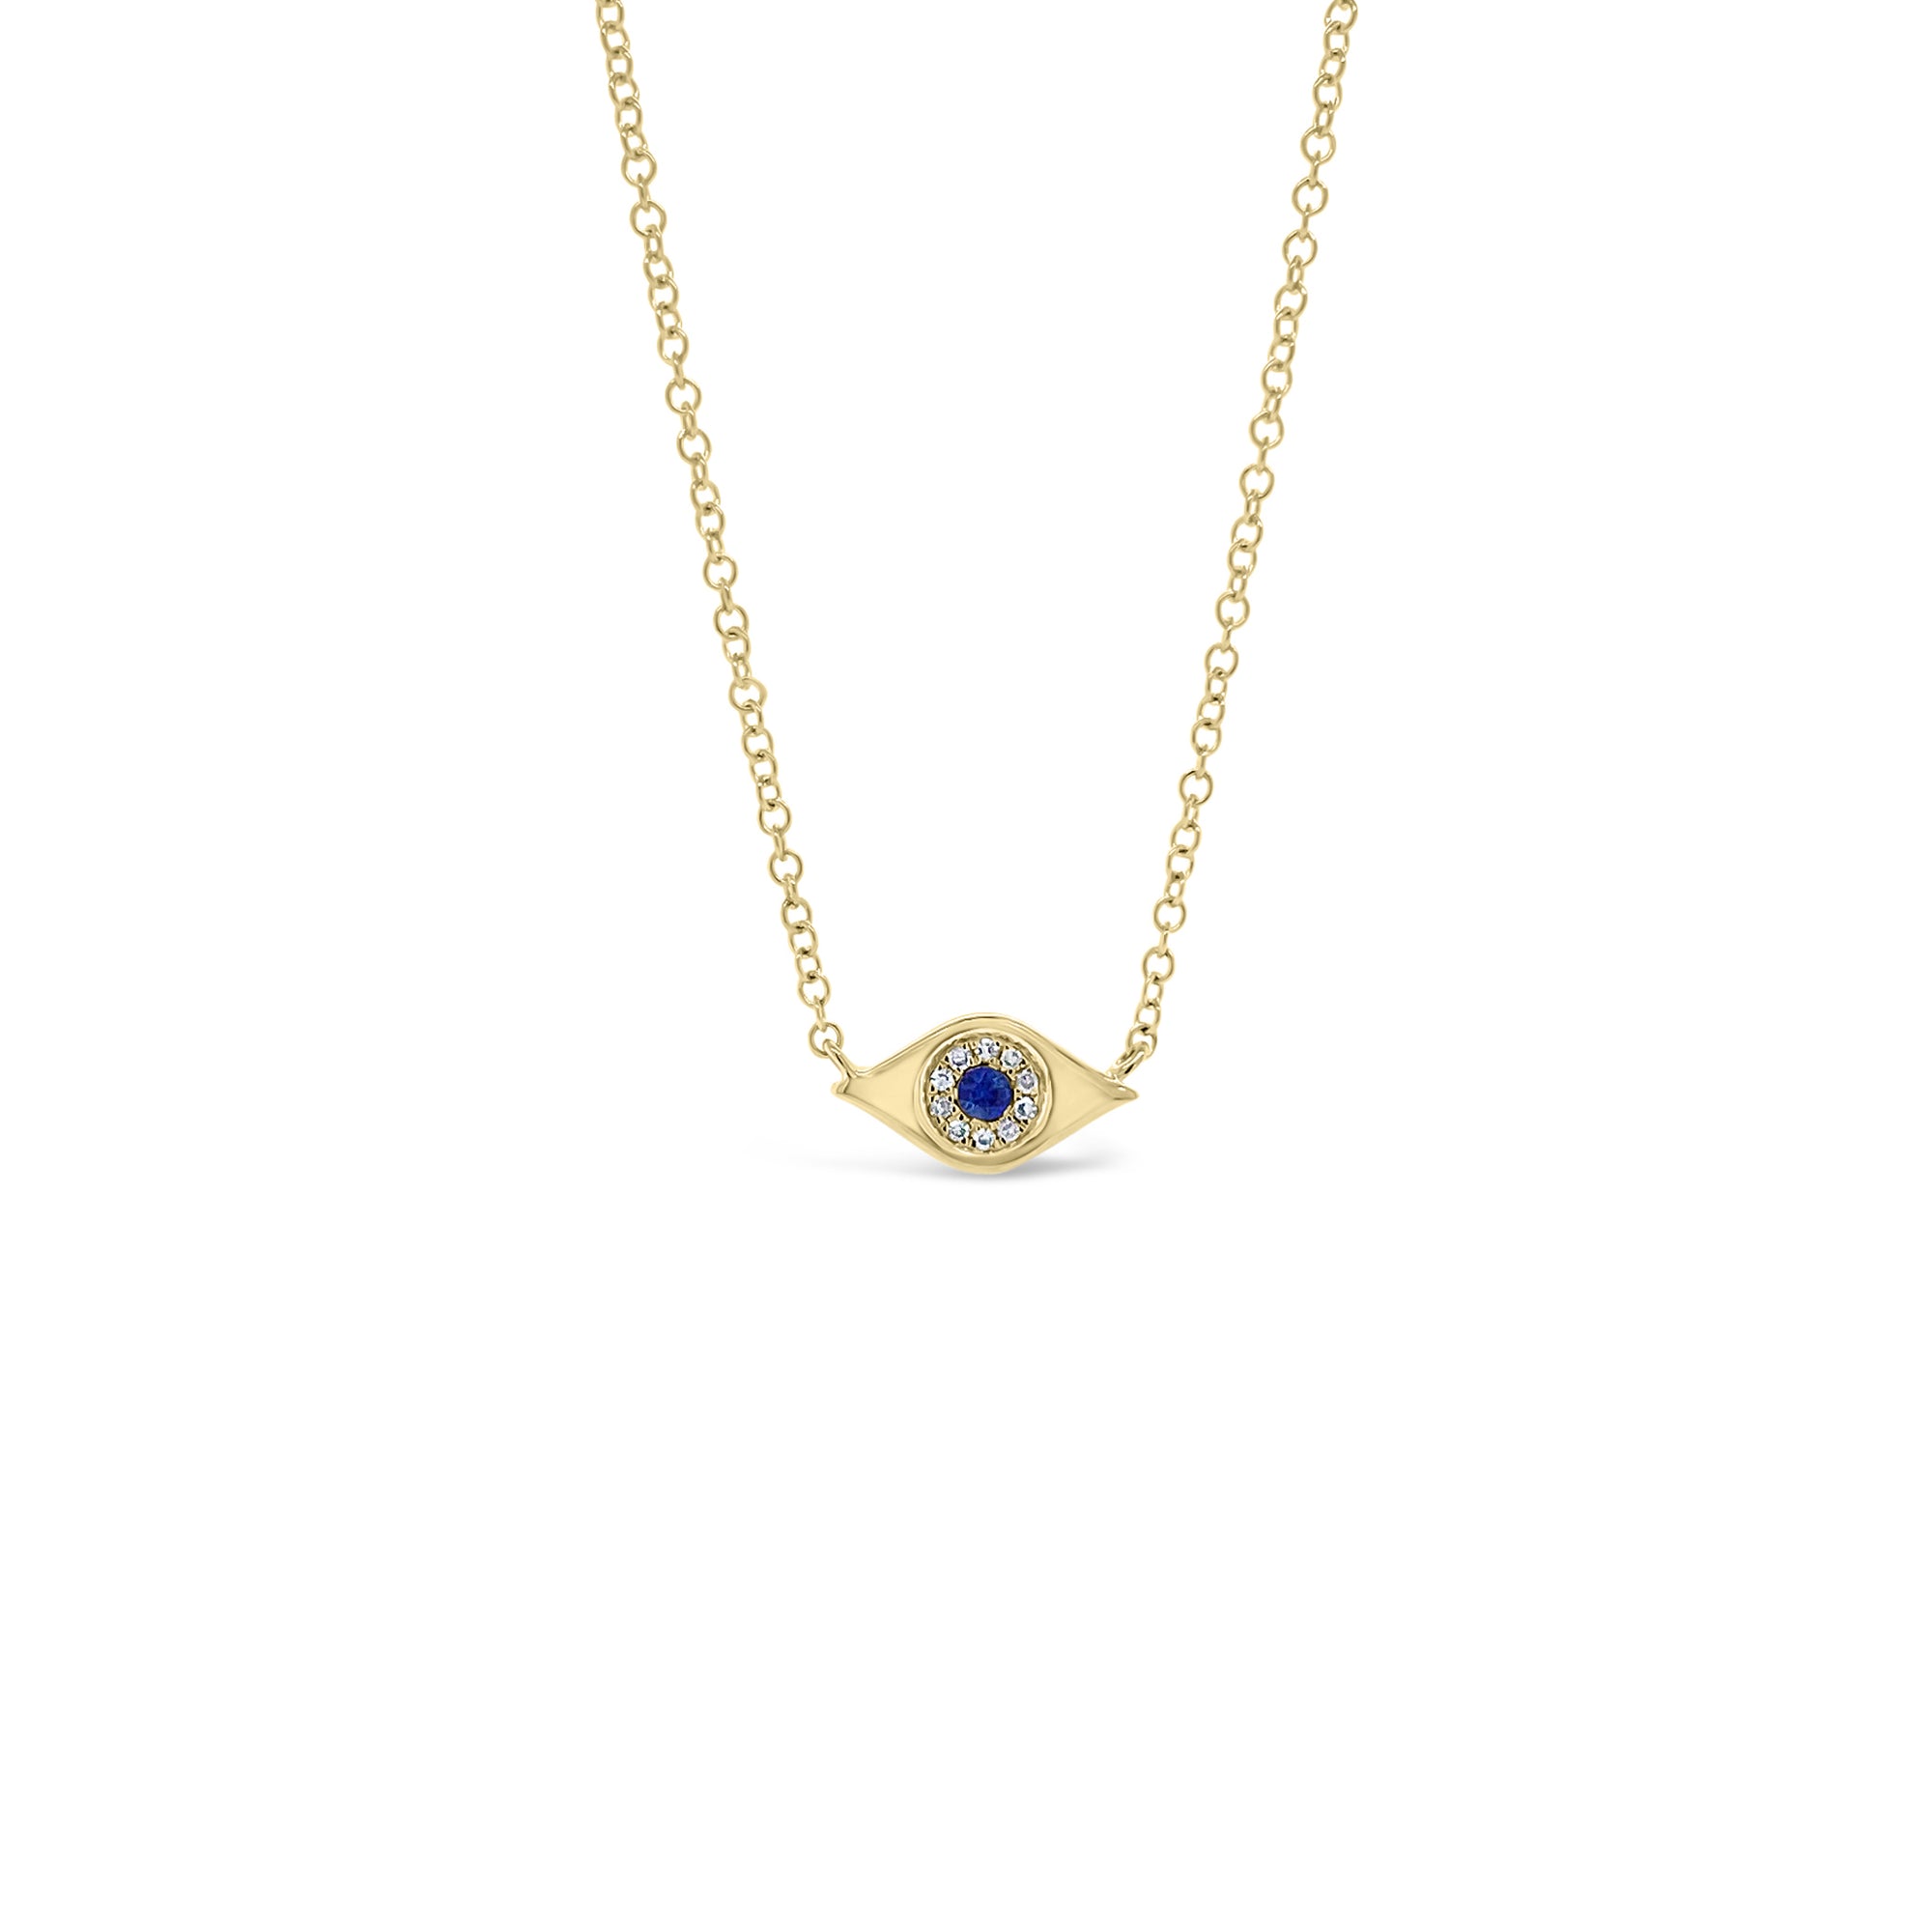 Sapphire & Diamond Evil Eye Pendant  - 14K yellow gold weighing 1.65 grams  - 10 round diamonds totaling 0.02 carats  - 0.03 ct sapphire